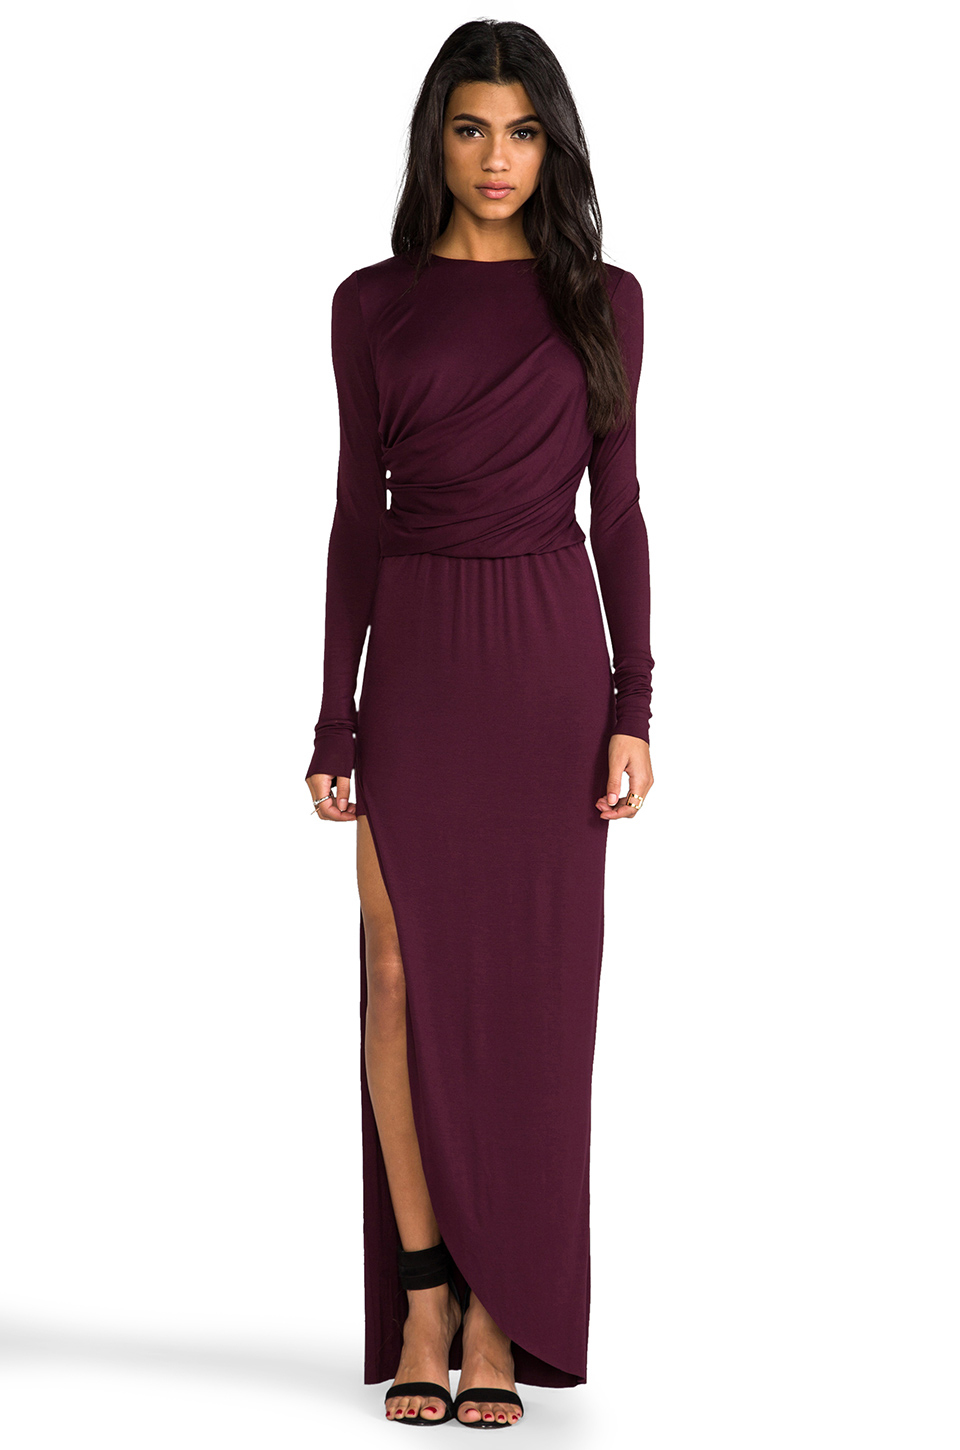 Lyst - Sen Rasha Dress in Burgundy in Purple